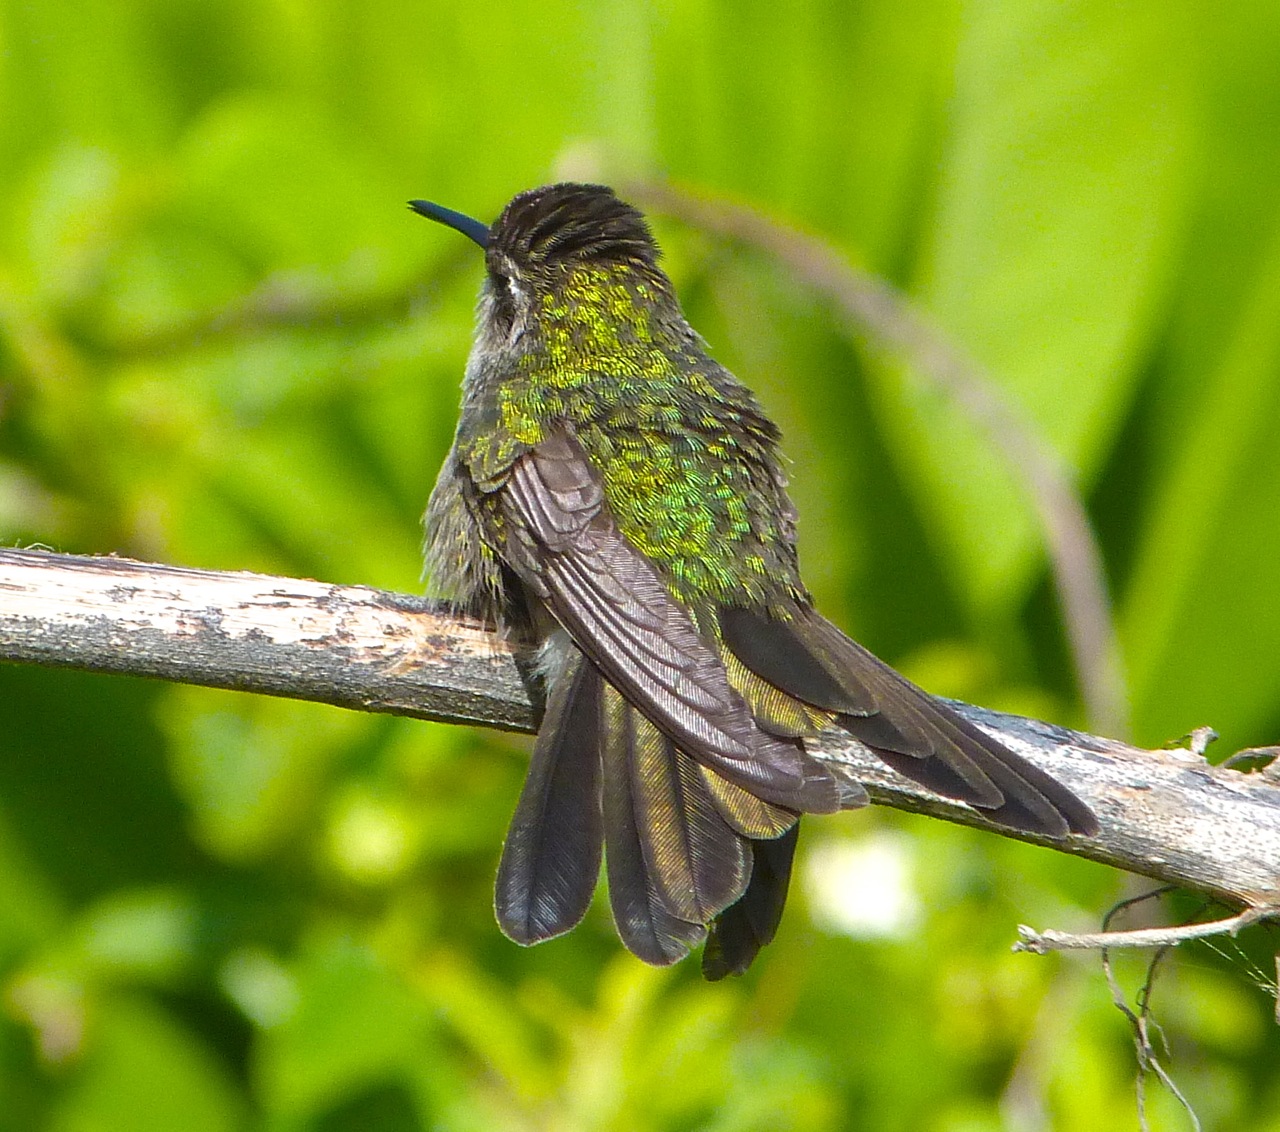 Cuban Emerald Hummingbird preening, Abaco 5